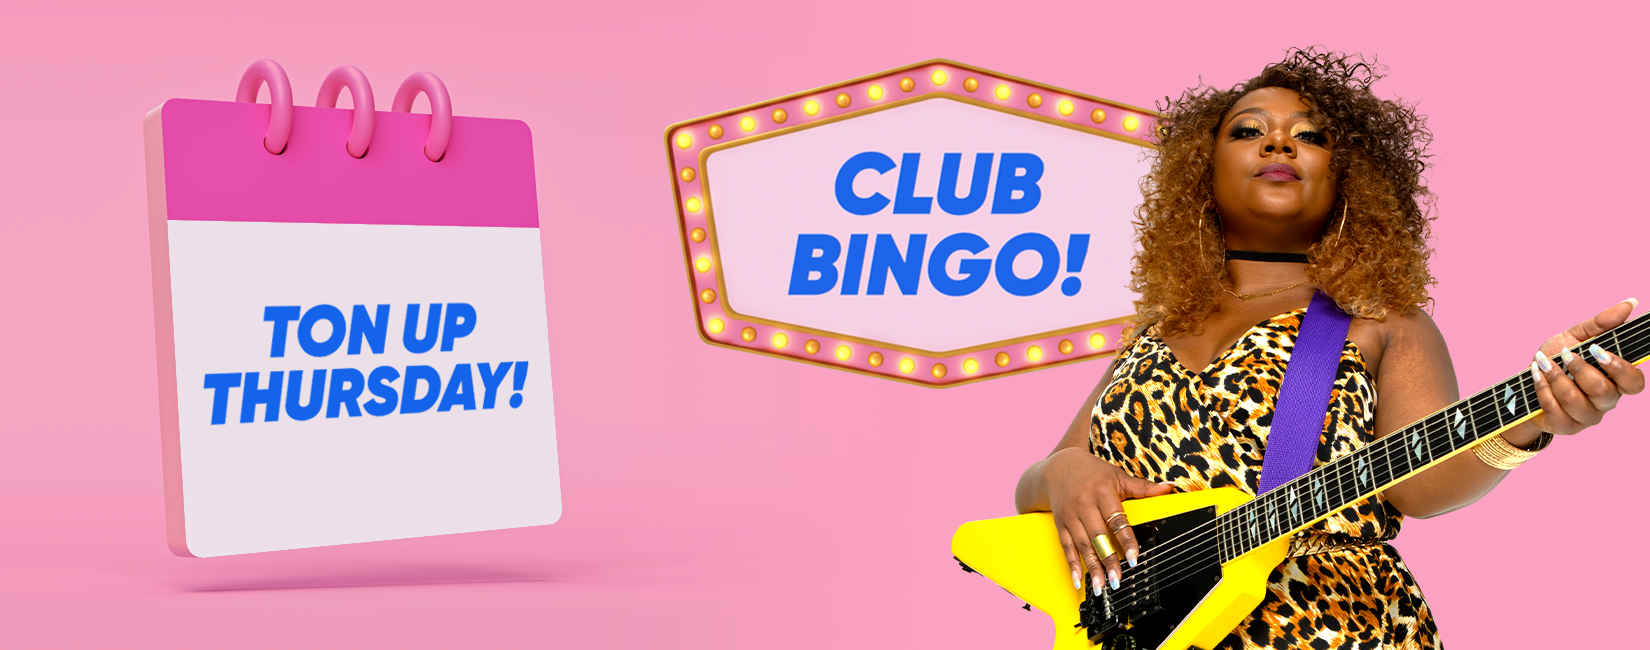 Club Bingo Promotional Banner 04 Thursday 1650x650